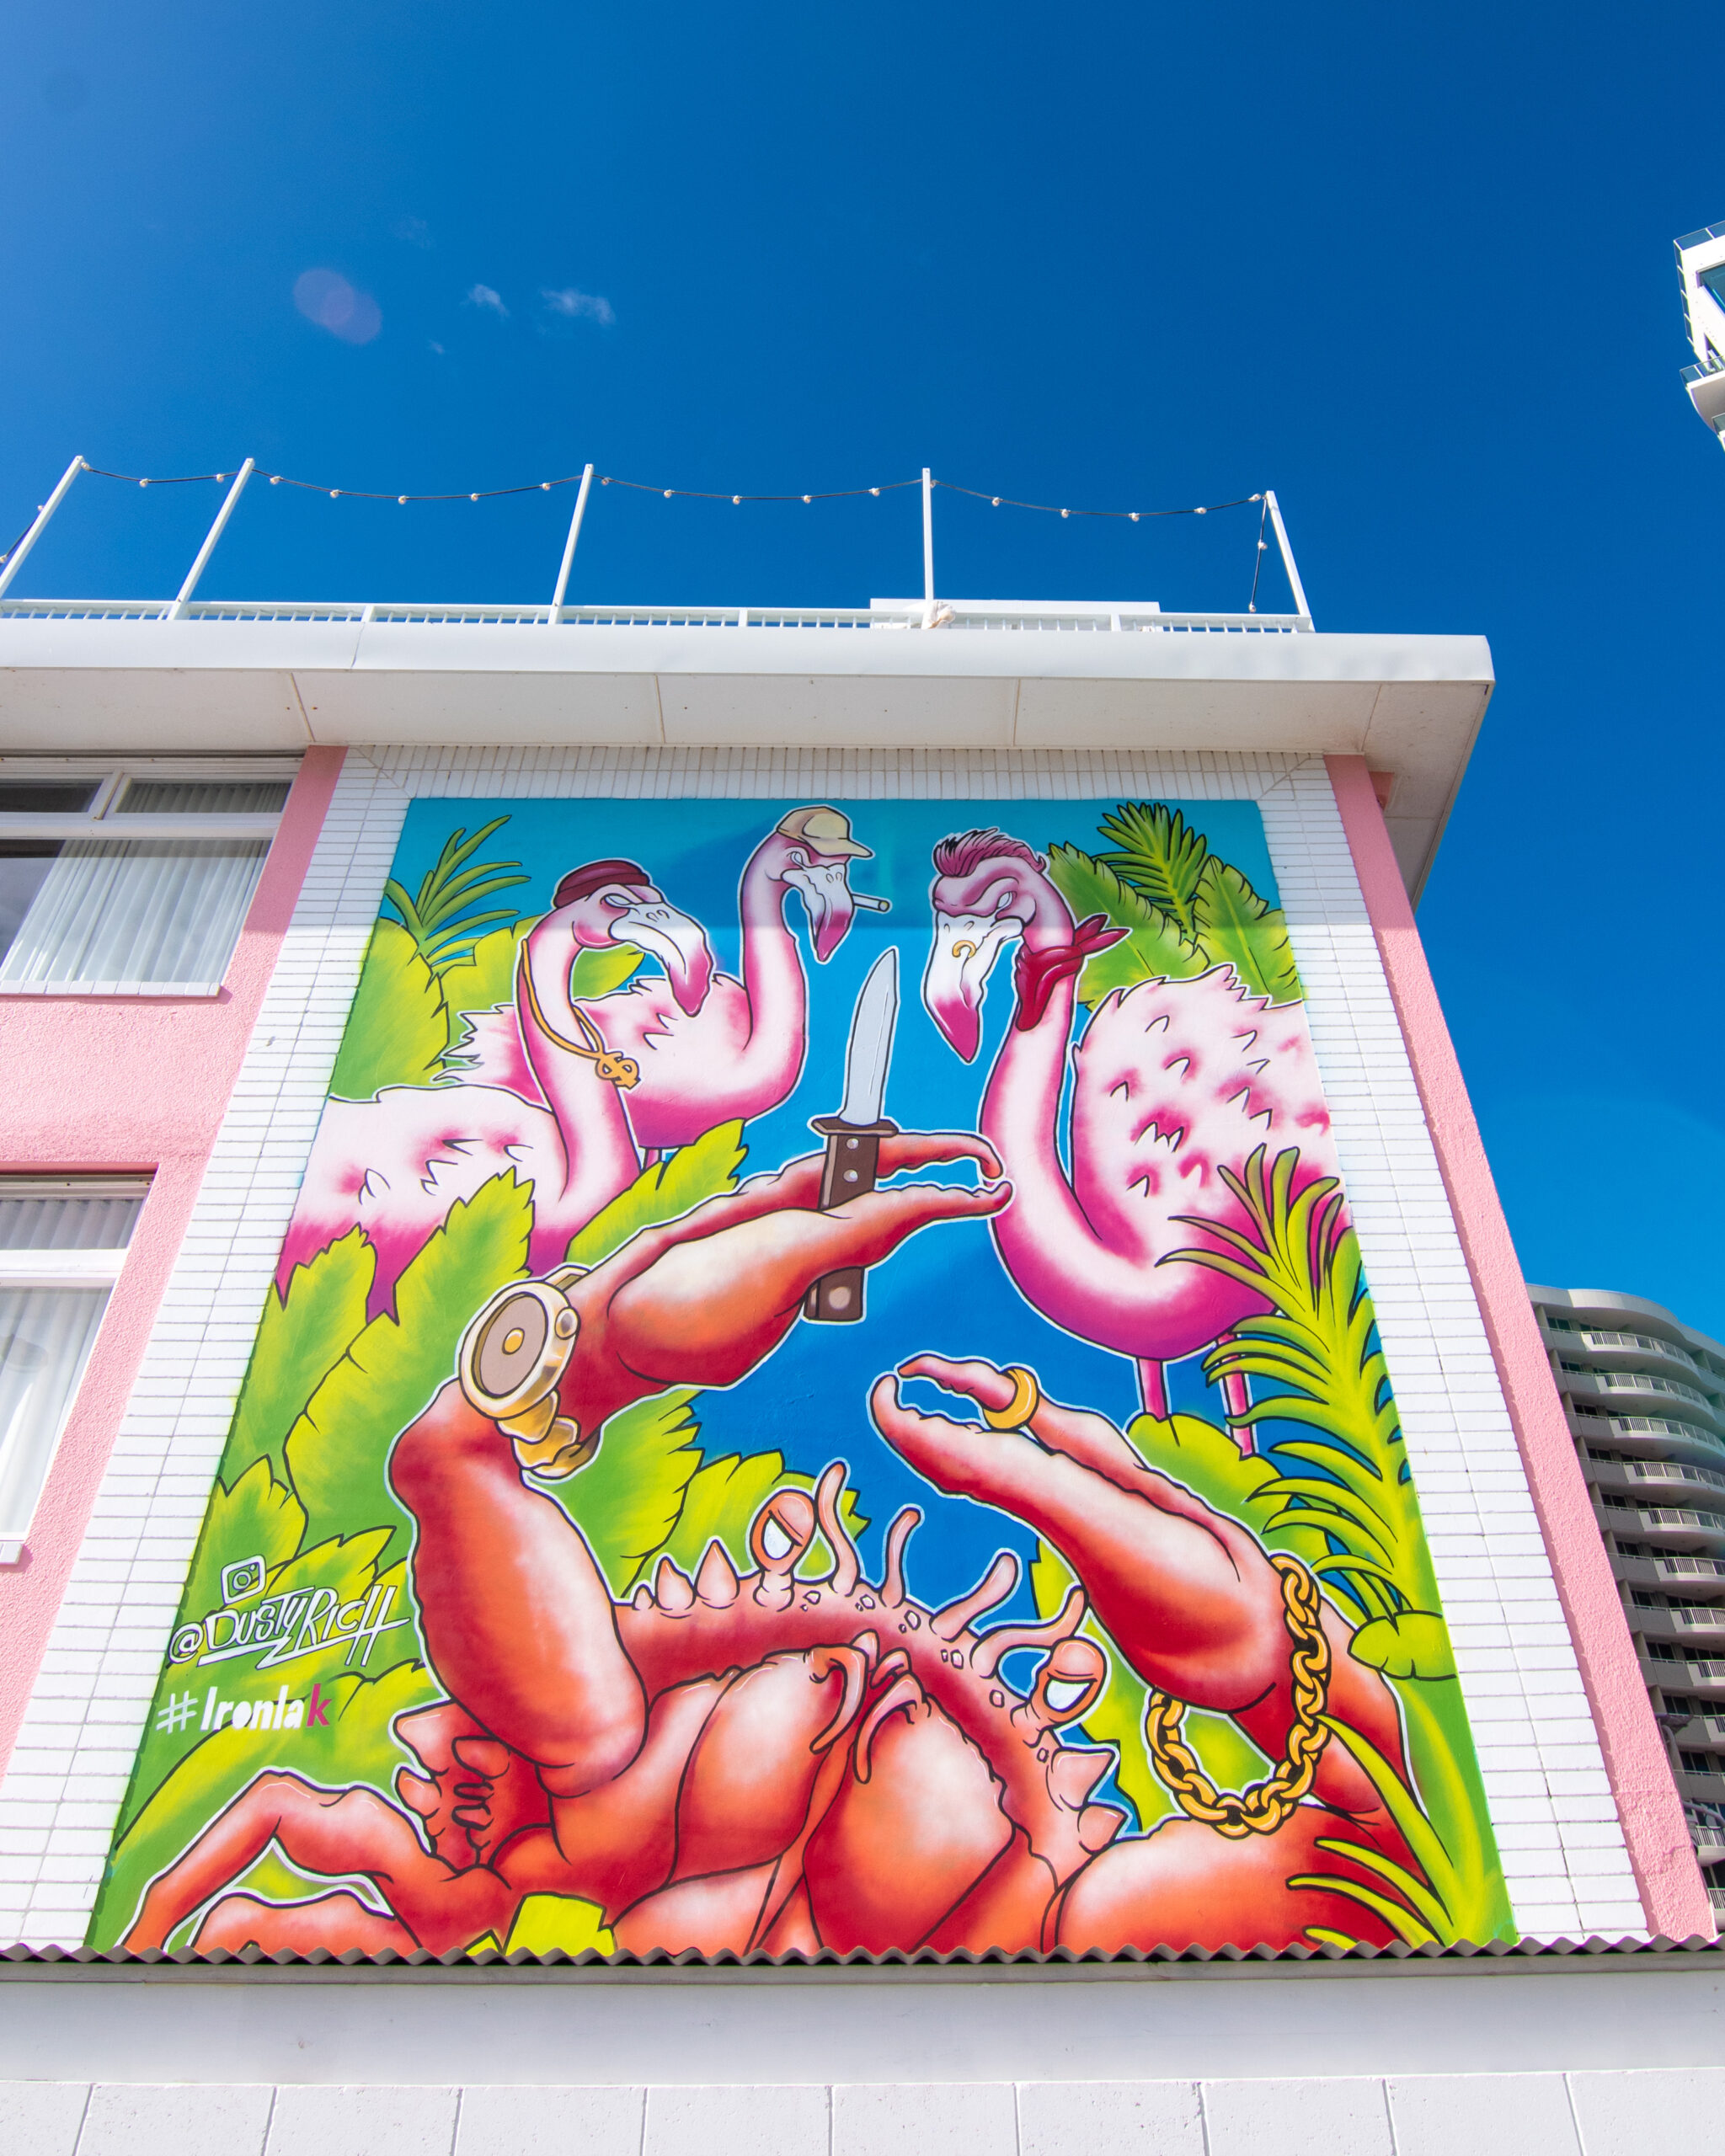 The Pink Hotel Coolangatta artwork